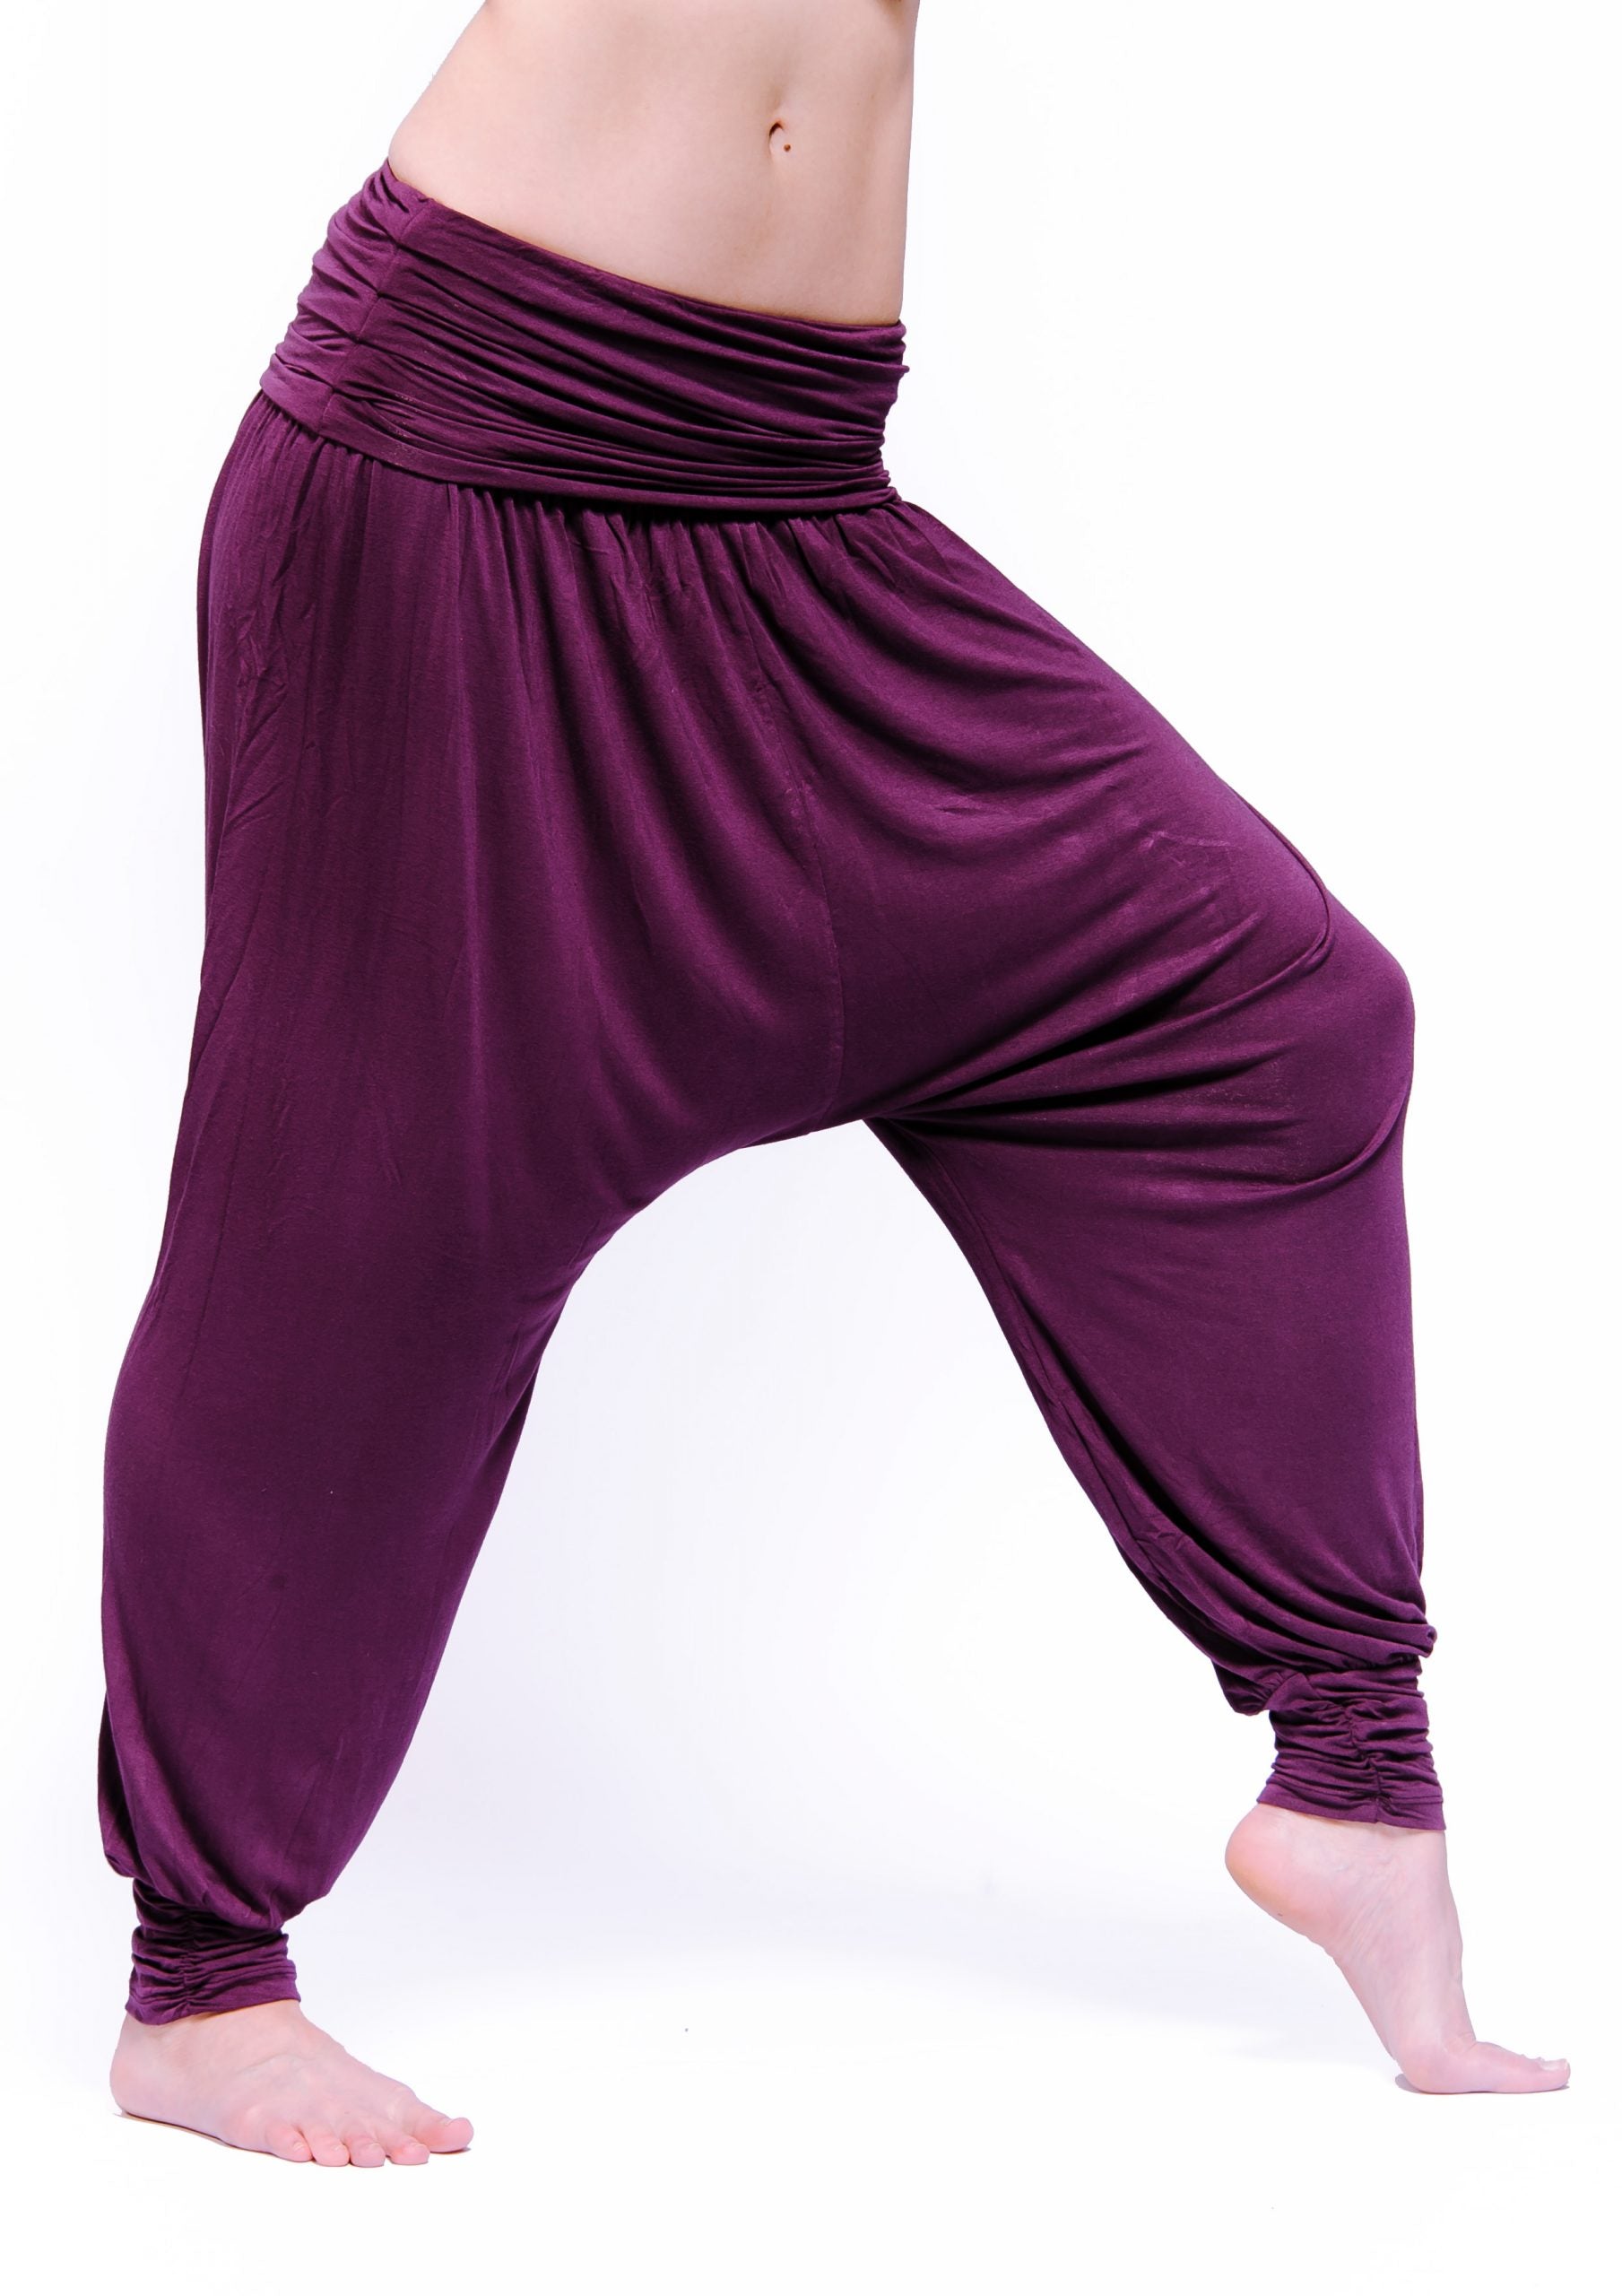 Comfort Flow Purple Yoga Outfit - Harem Pants, Support Top Set